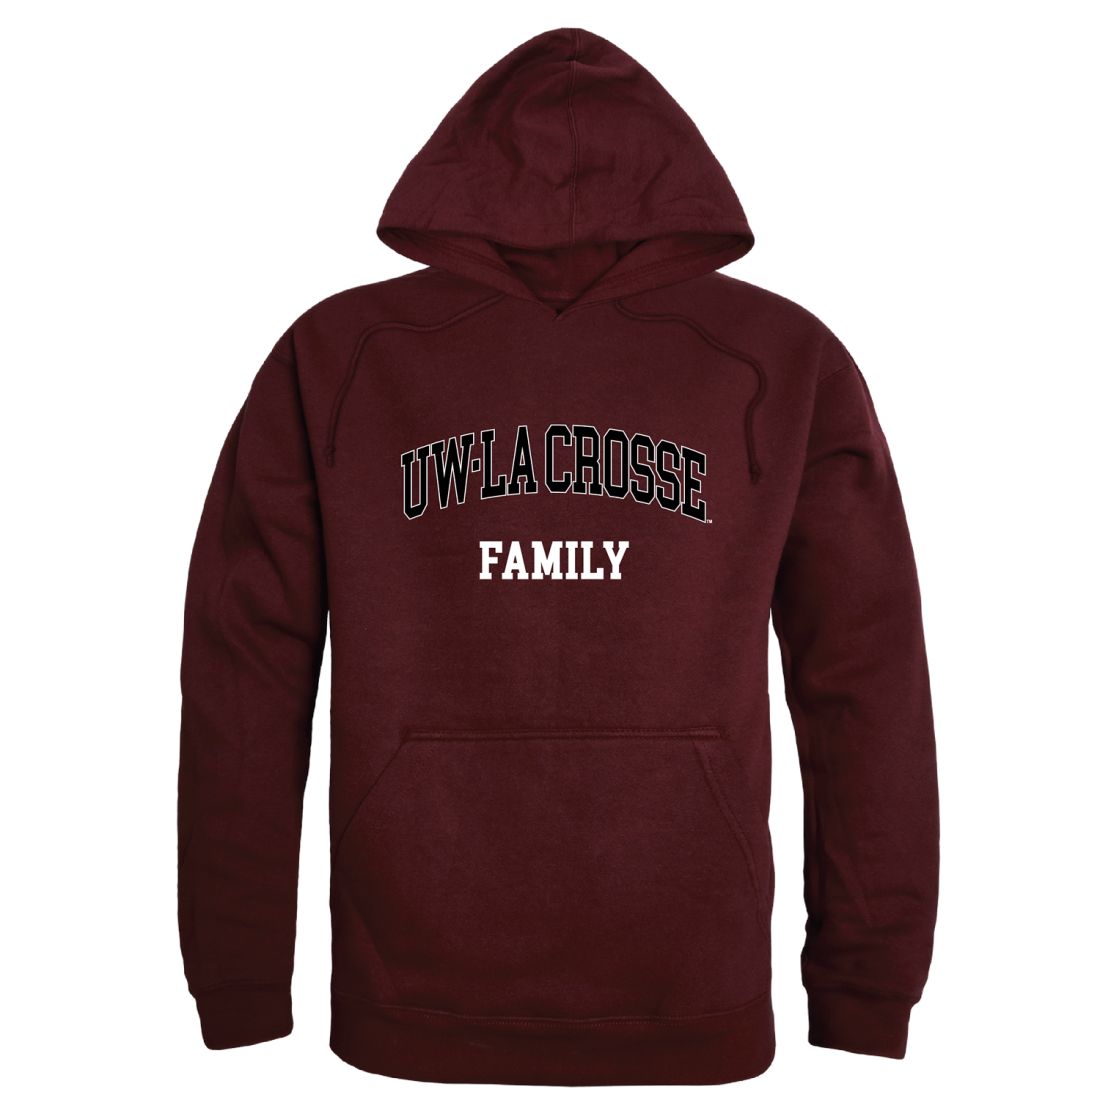 University of Wisconsin-La Crosse Eagles Family Hoodie Sweatshirts